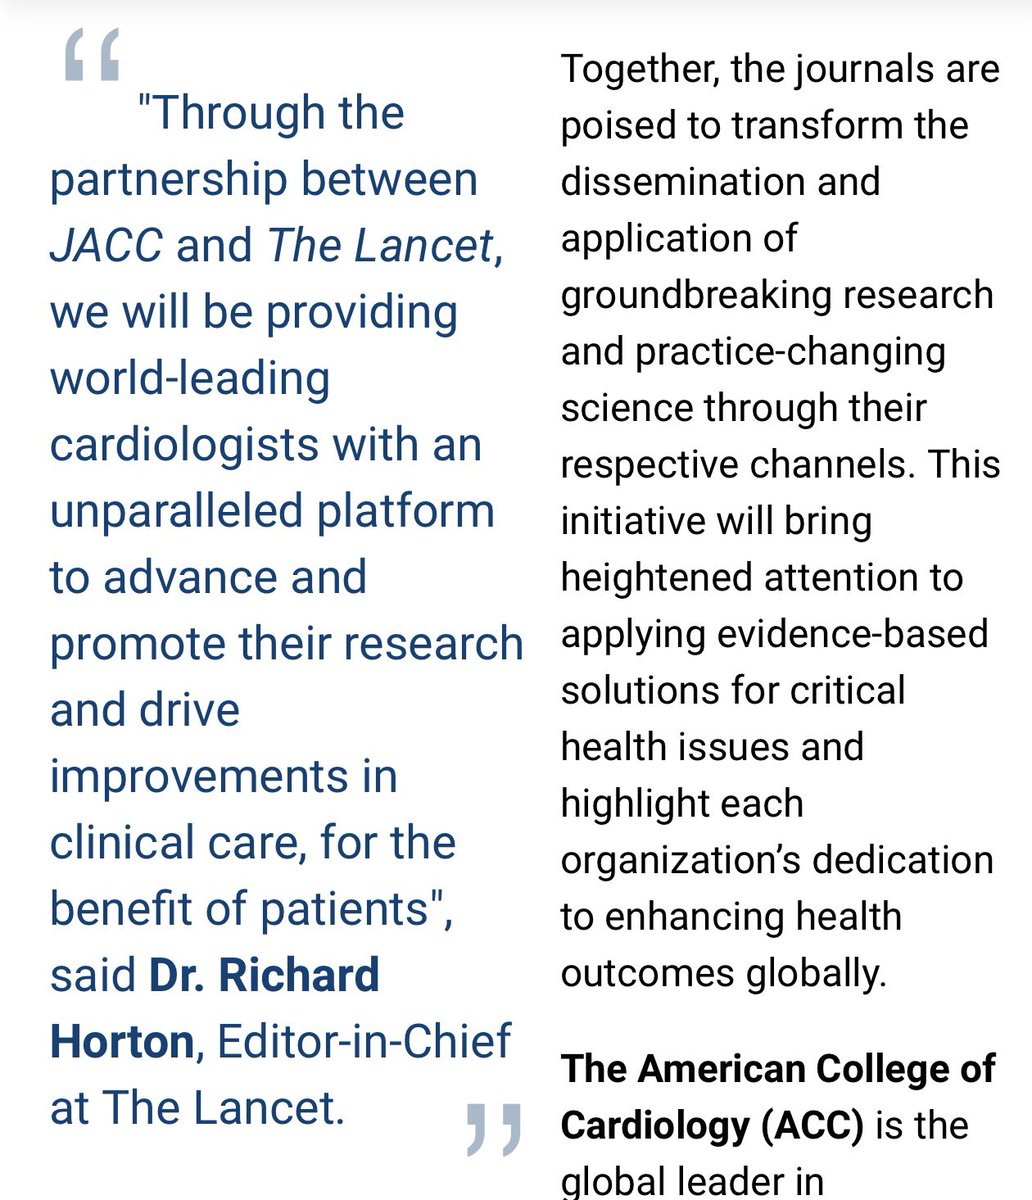 Fantastic landmark partnership bw @JACCJournals @TheLancet on advancing global CV health impact via publications. Congrats @hmkyale @Justine_Turco & team! @DeeDeeWangMD @MinnowWalsh #JACCCaseReports jacc.org/announcements/…